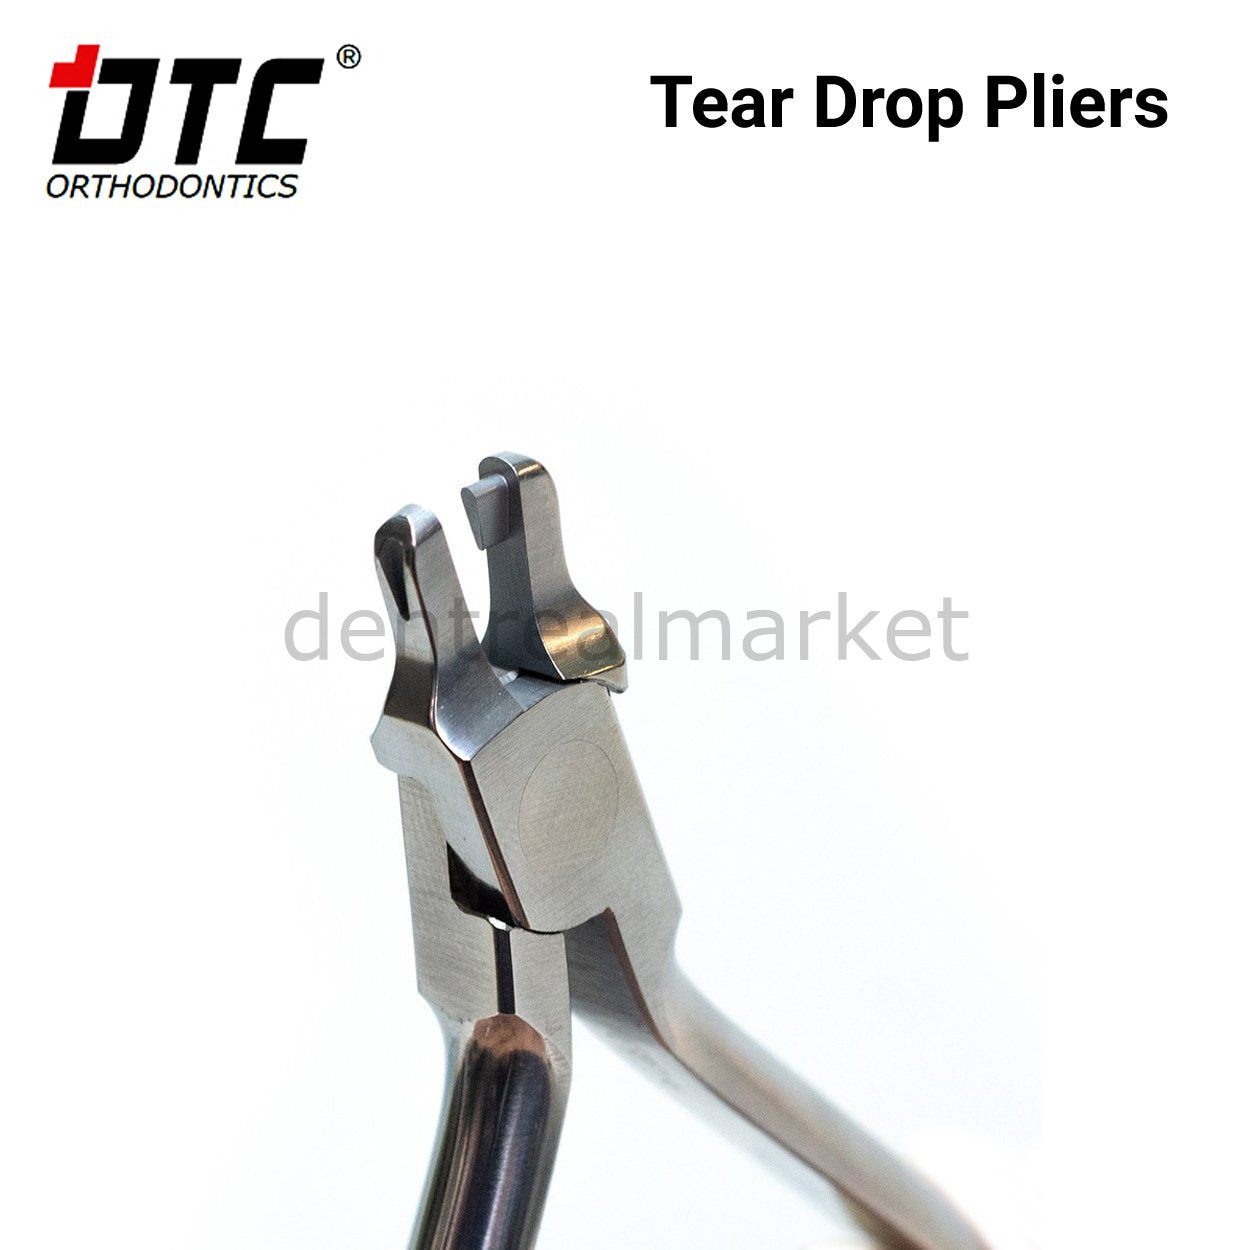 DentrealStore - Dtc Orthodontics Clear Aligner Plier - Tear Drop Pliers